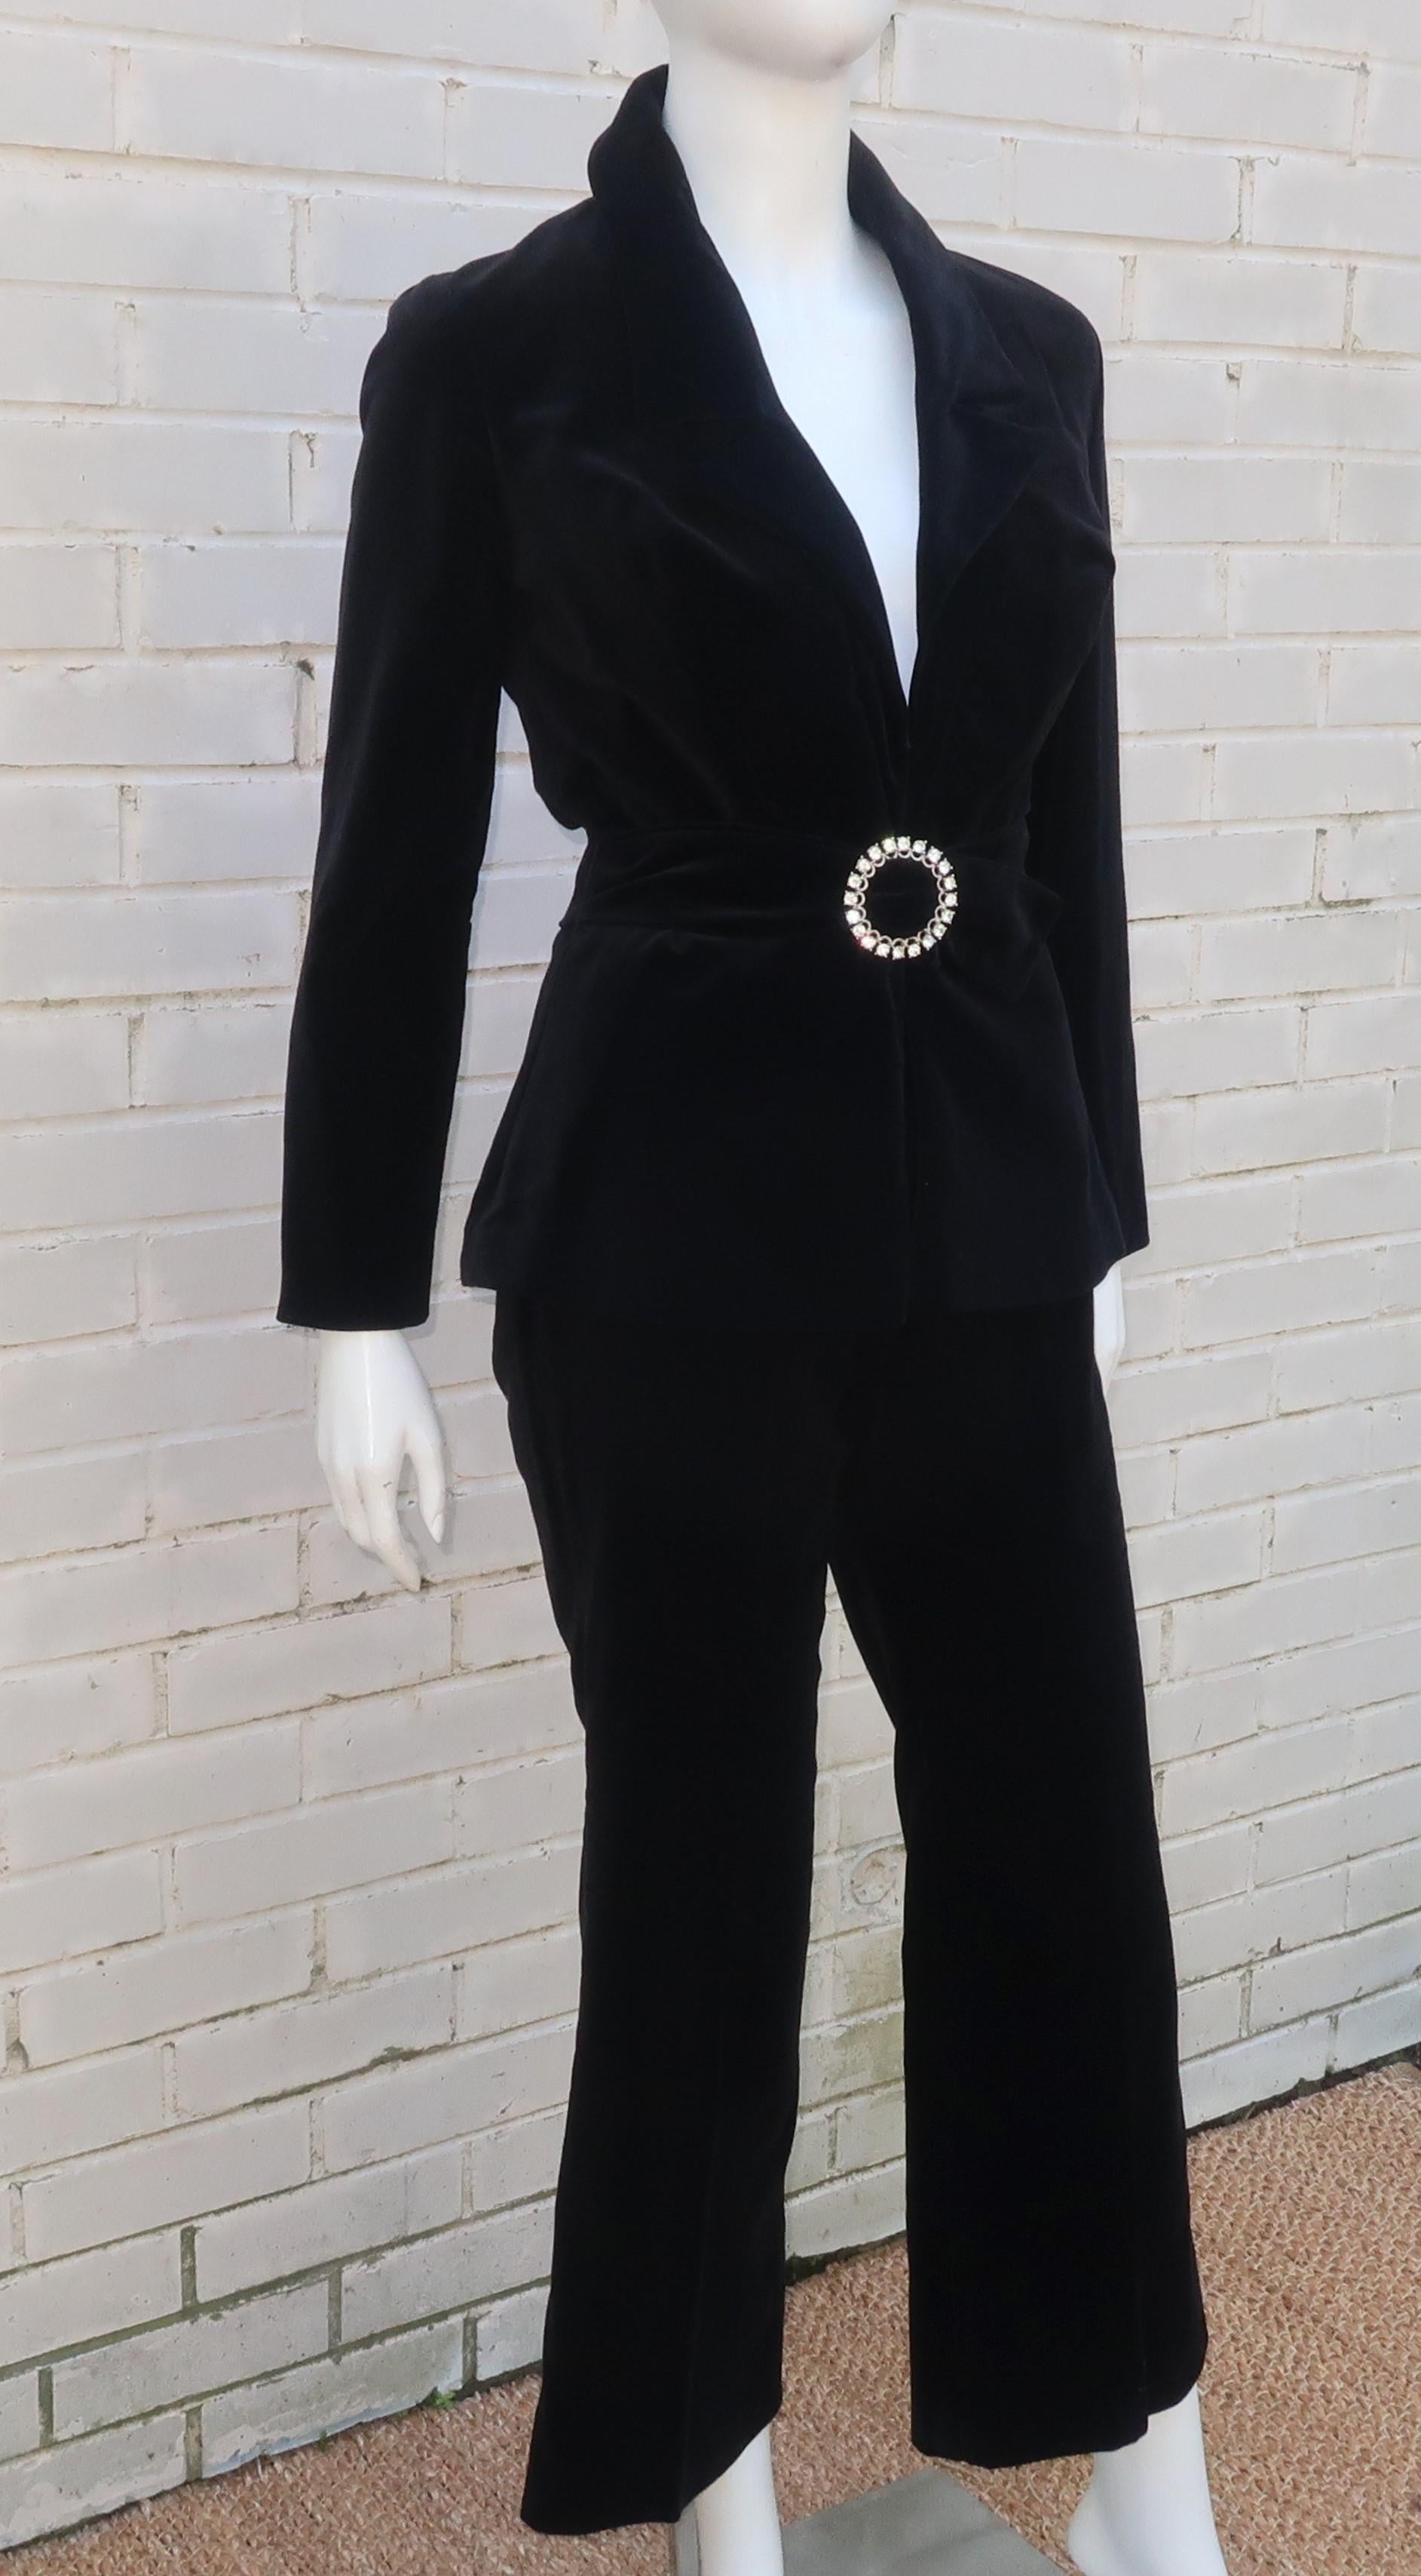 Black Velvet Pant Suit With Rhinestone Belt, C.1970 For Sale 1